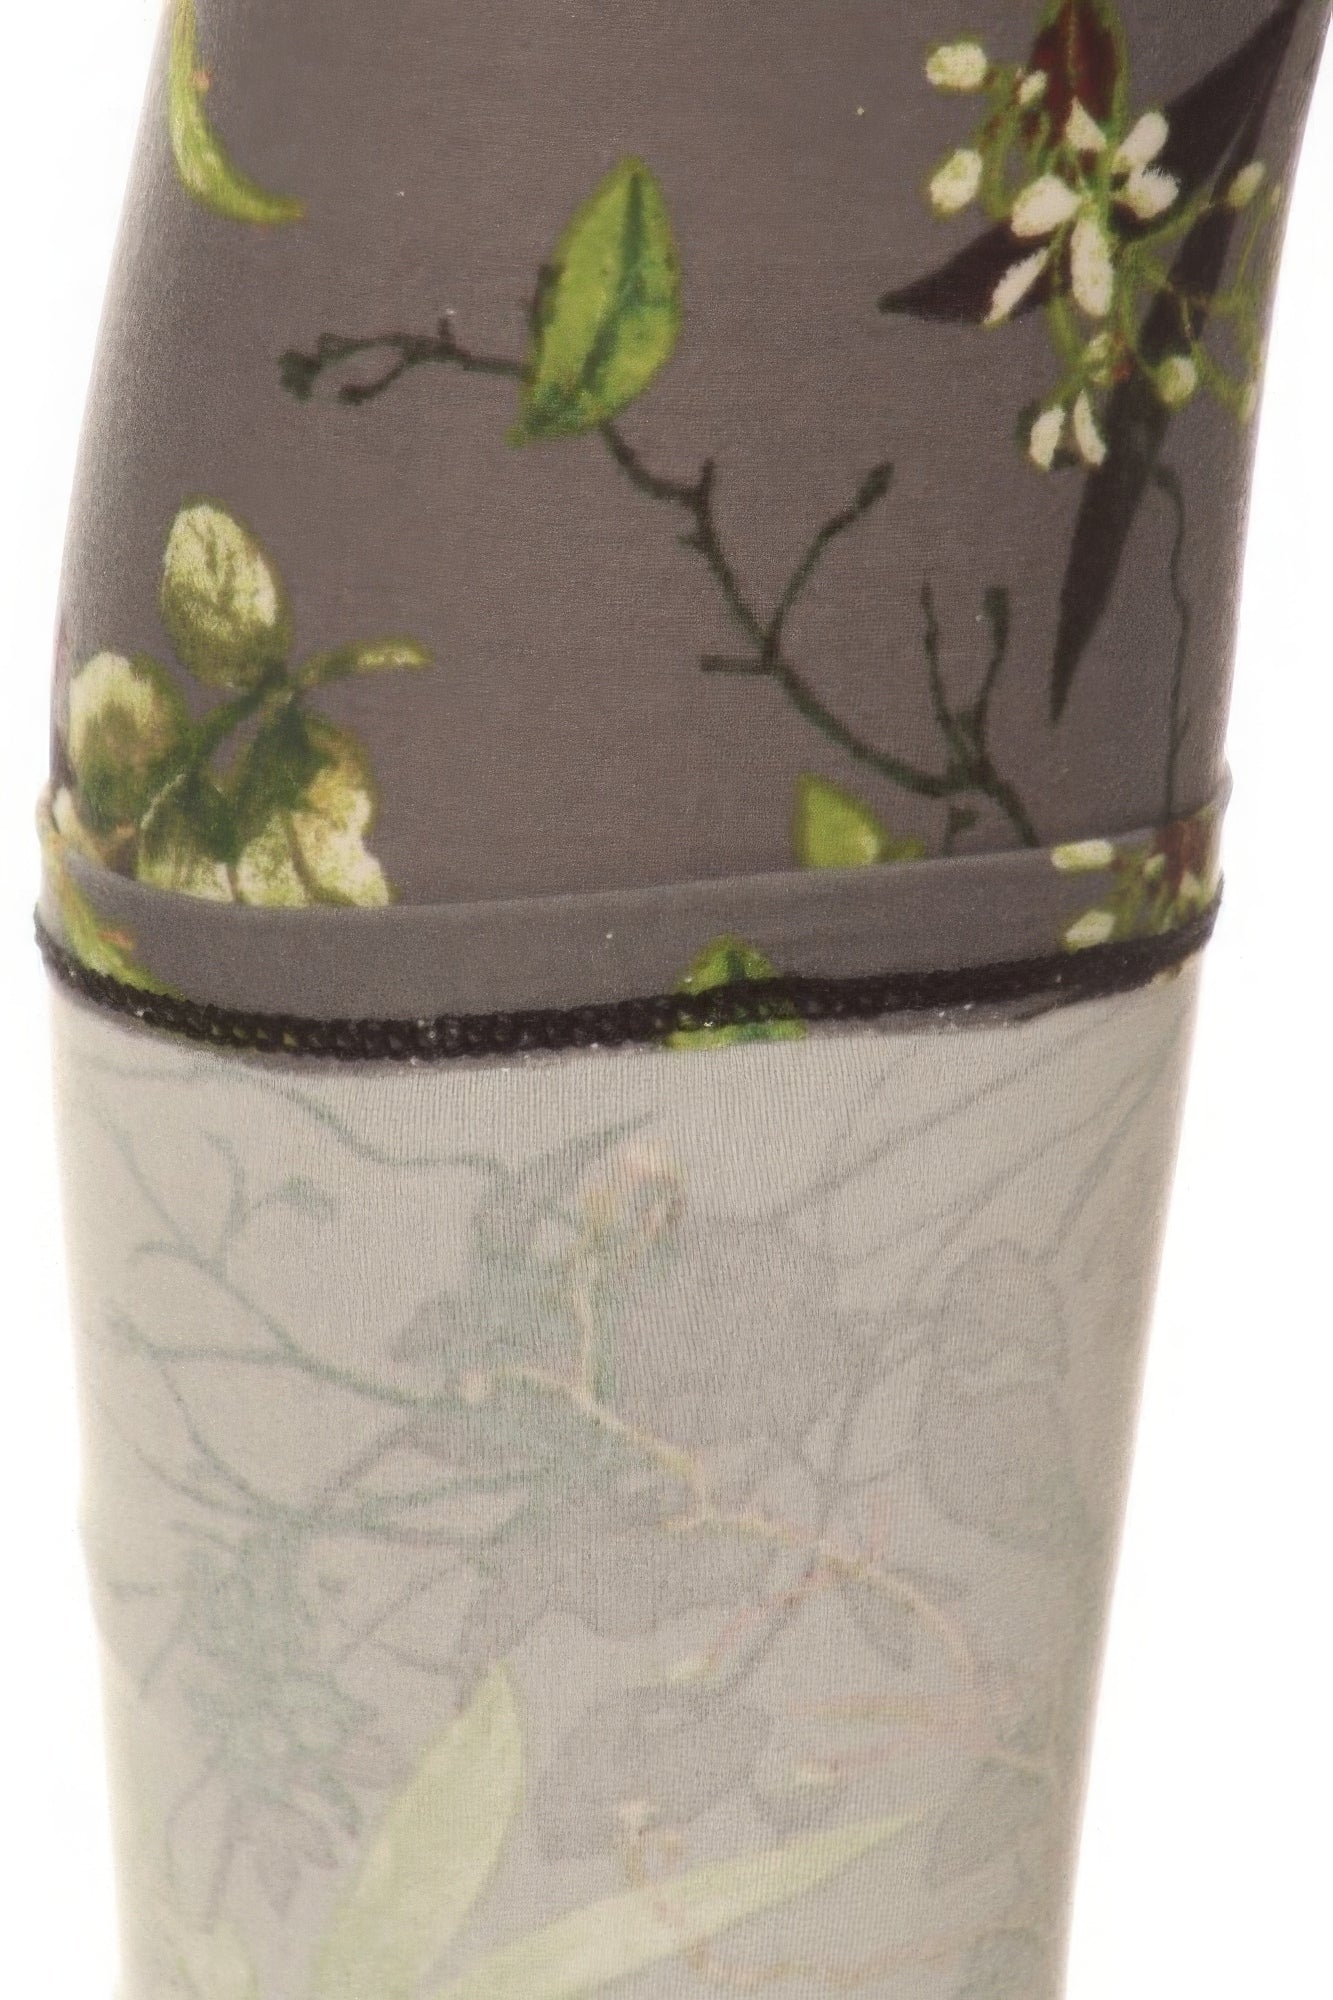 FZ Women's Floral Printed High Waisted Leggings With An Elastic Waist - FZwear